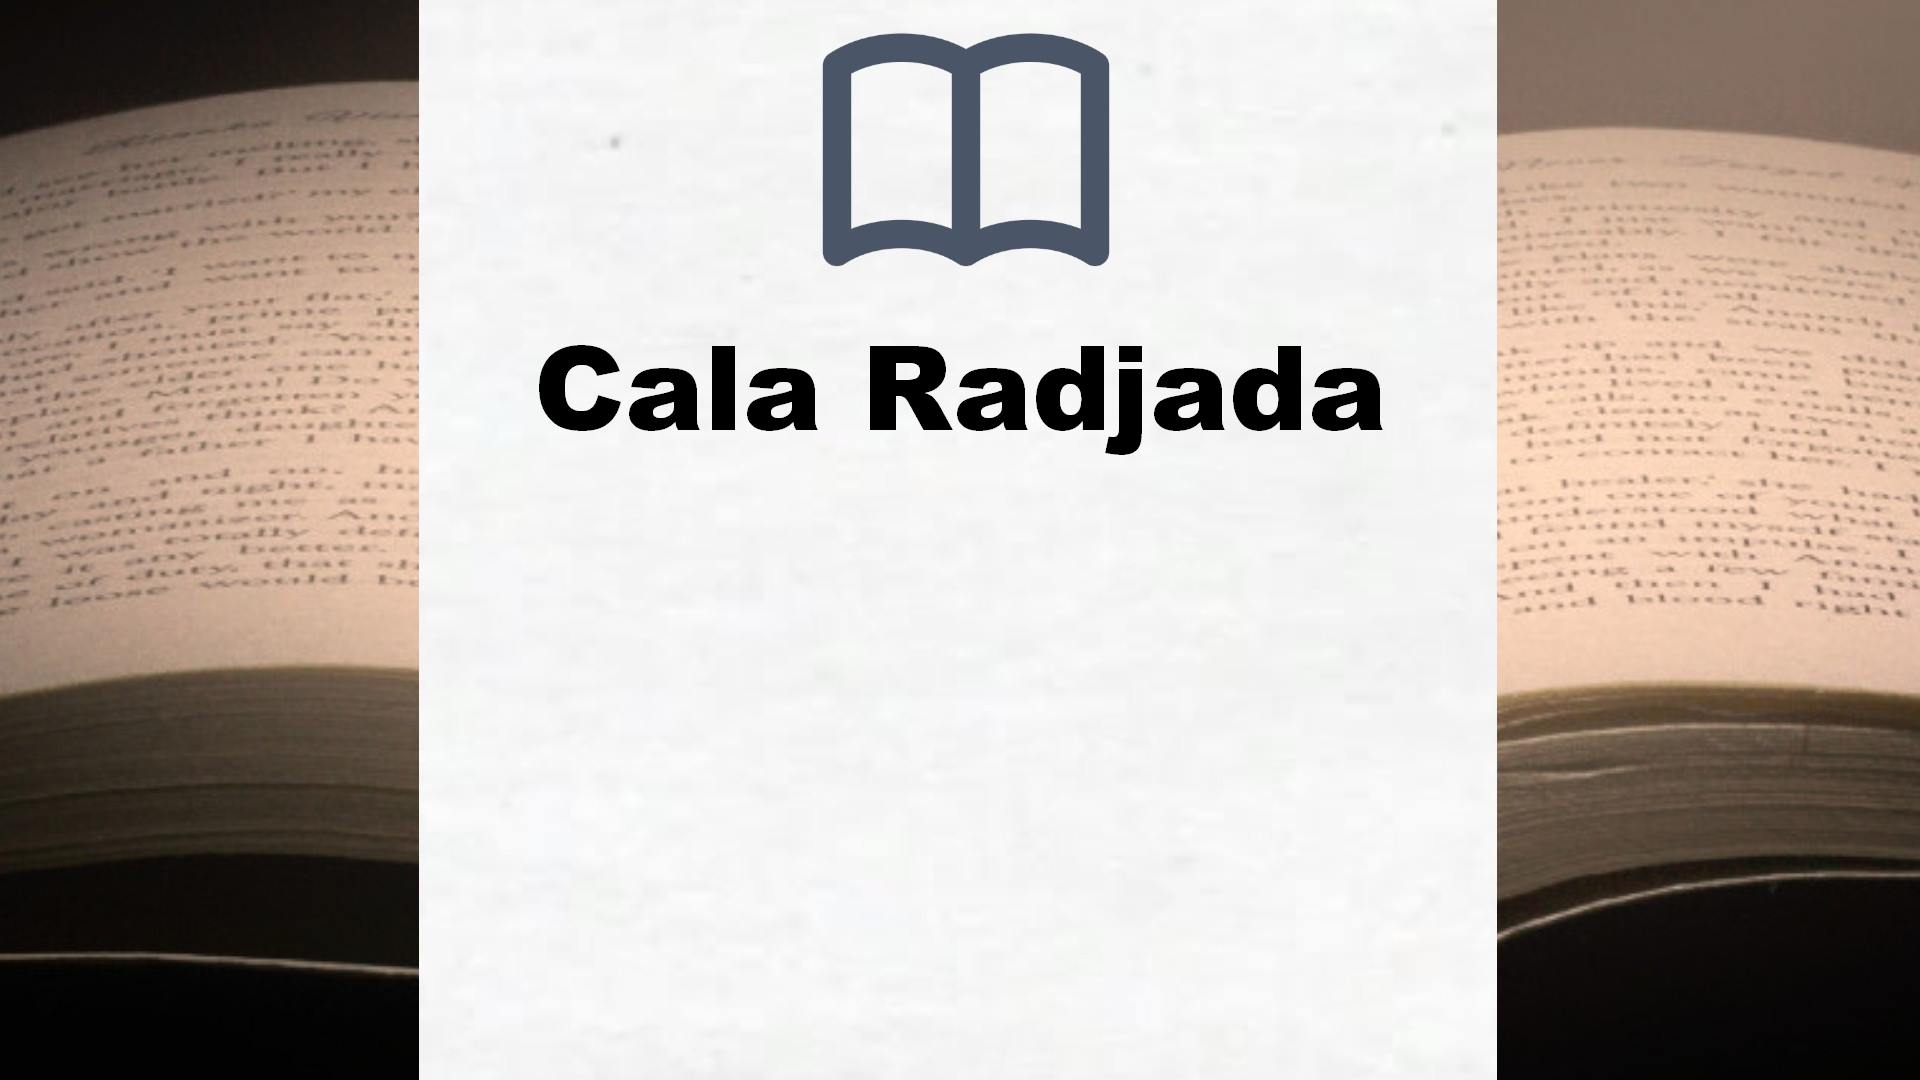 Bücher über Cala Radjada